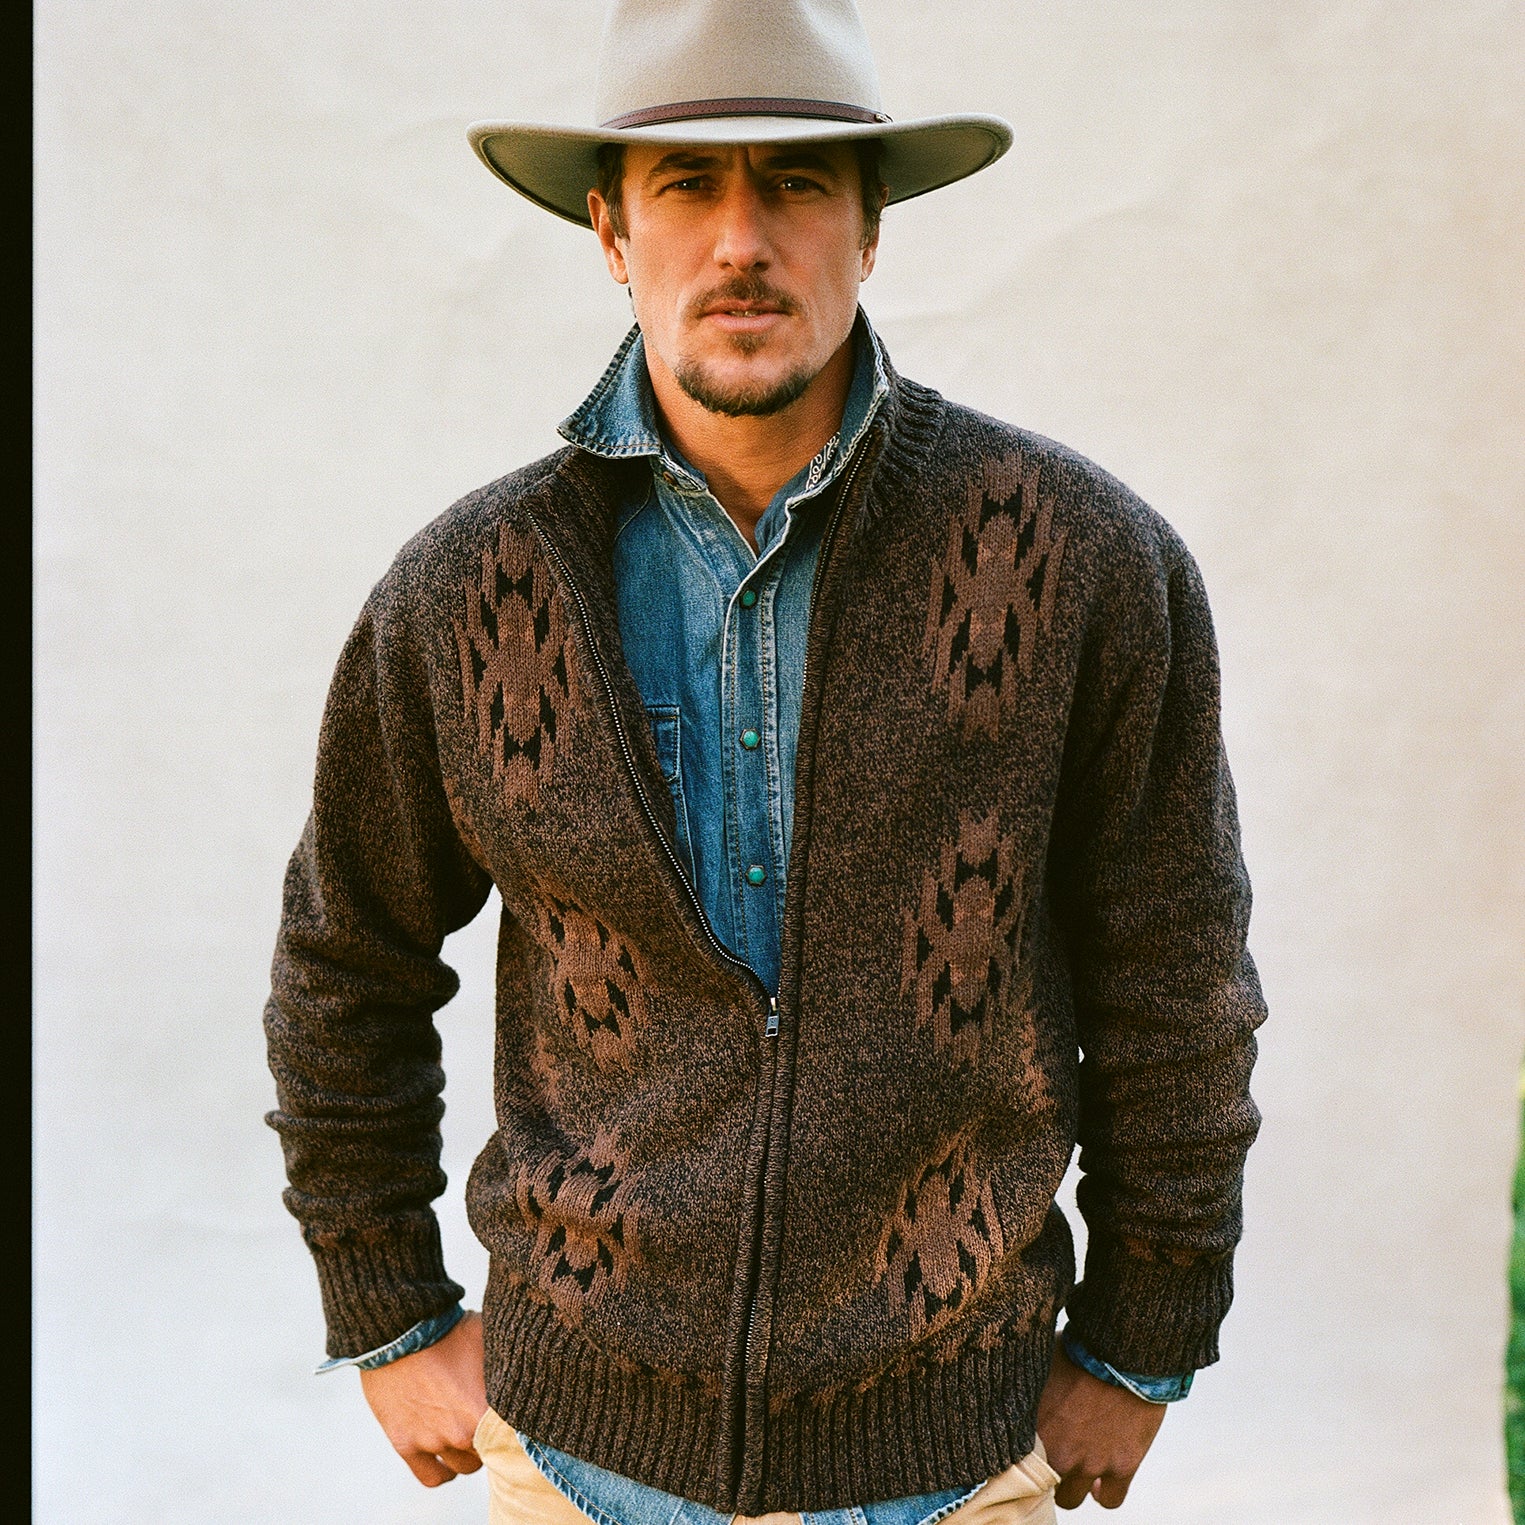 Stetson Womens Aztec Print Cardigan Sweater – Custom Cowboy Shop